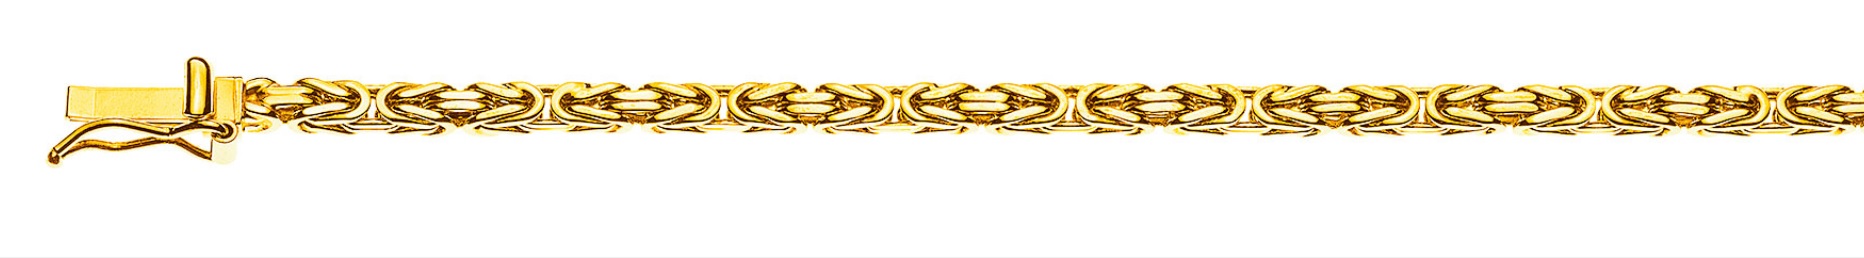 AURONOS Prestige Necklace Yellow Gold 18K King Chain 45cm 2.5mm